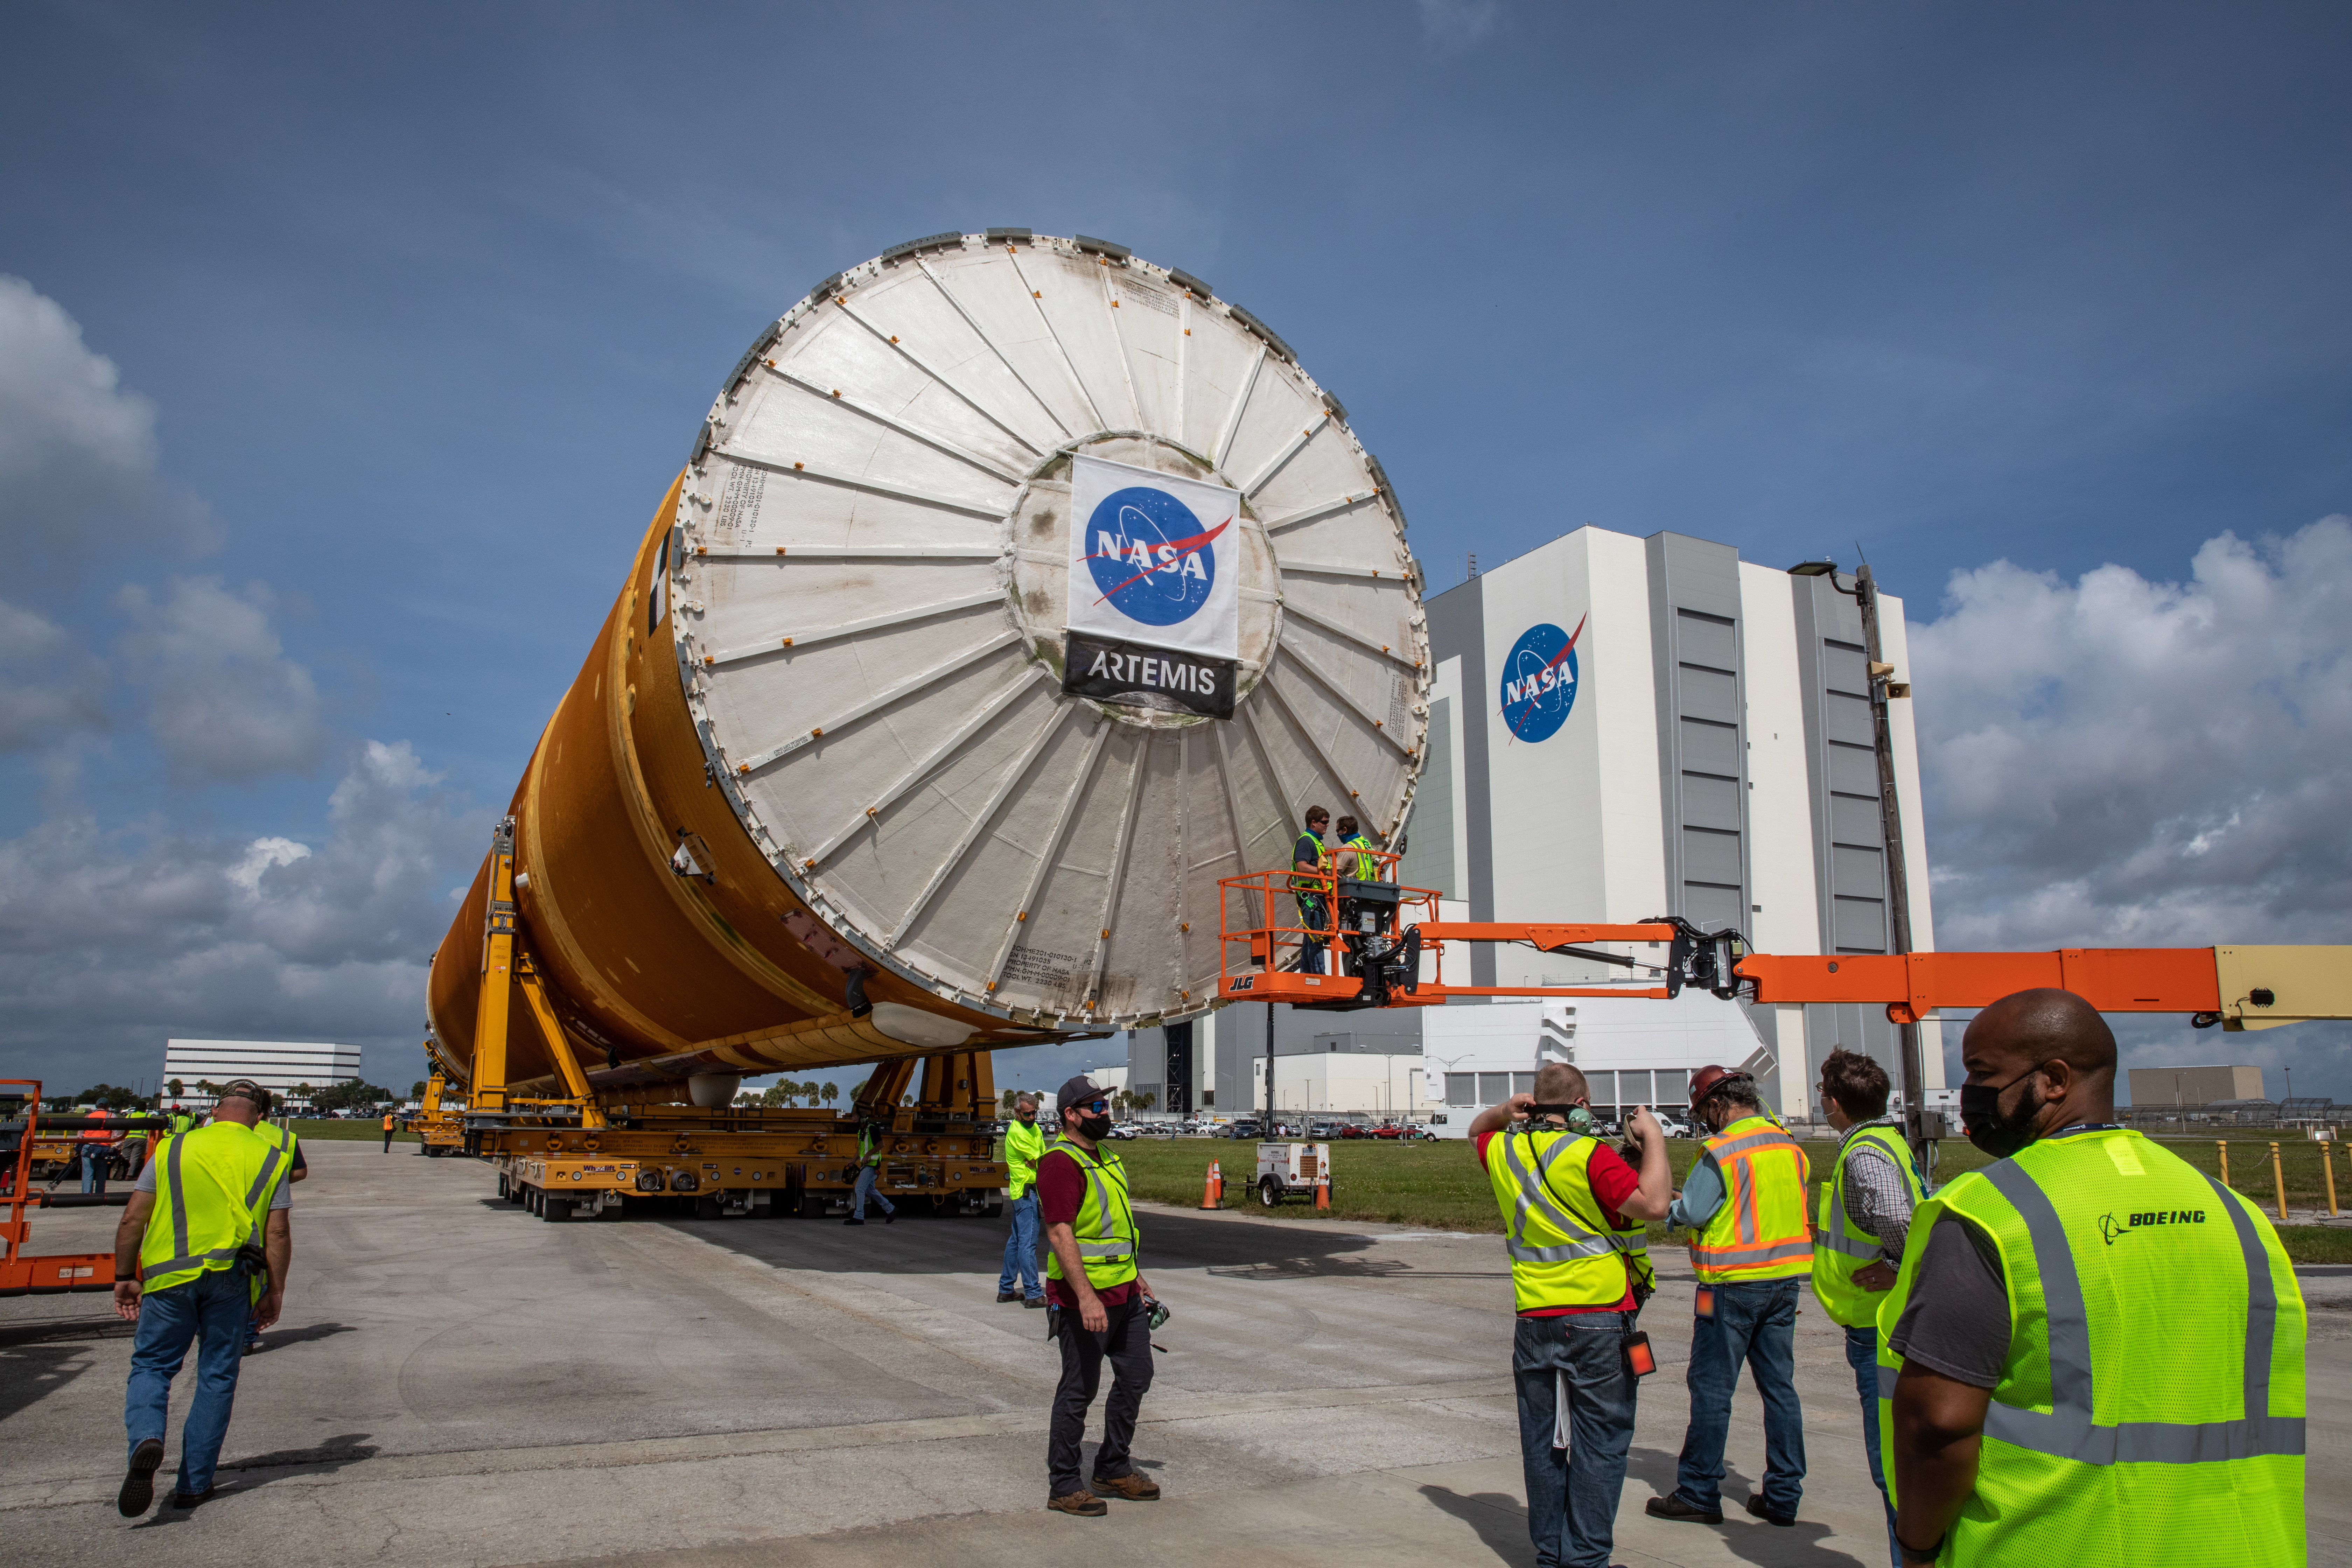 NASA Artemis being transported.